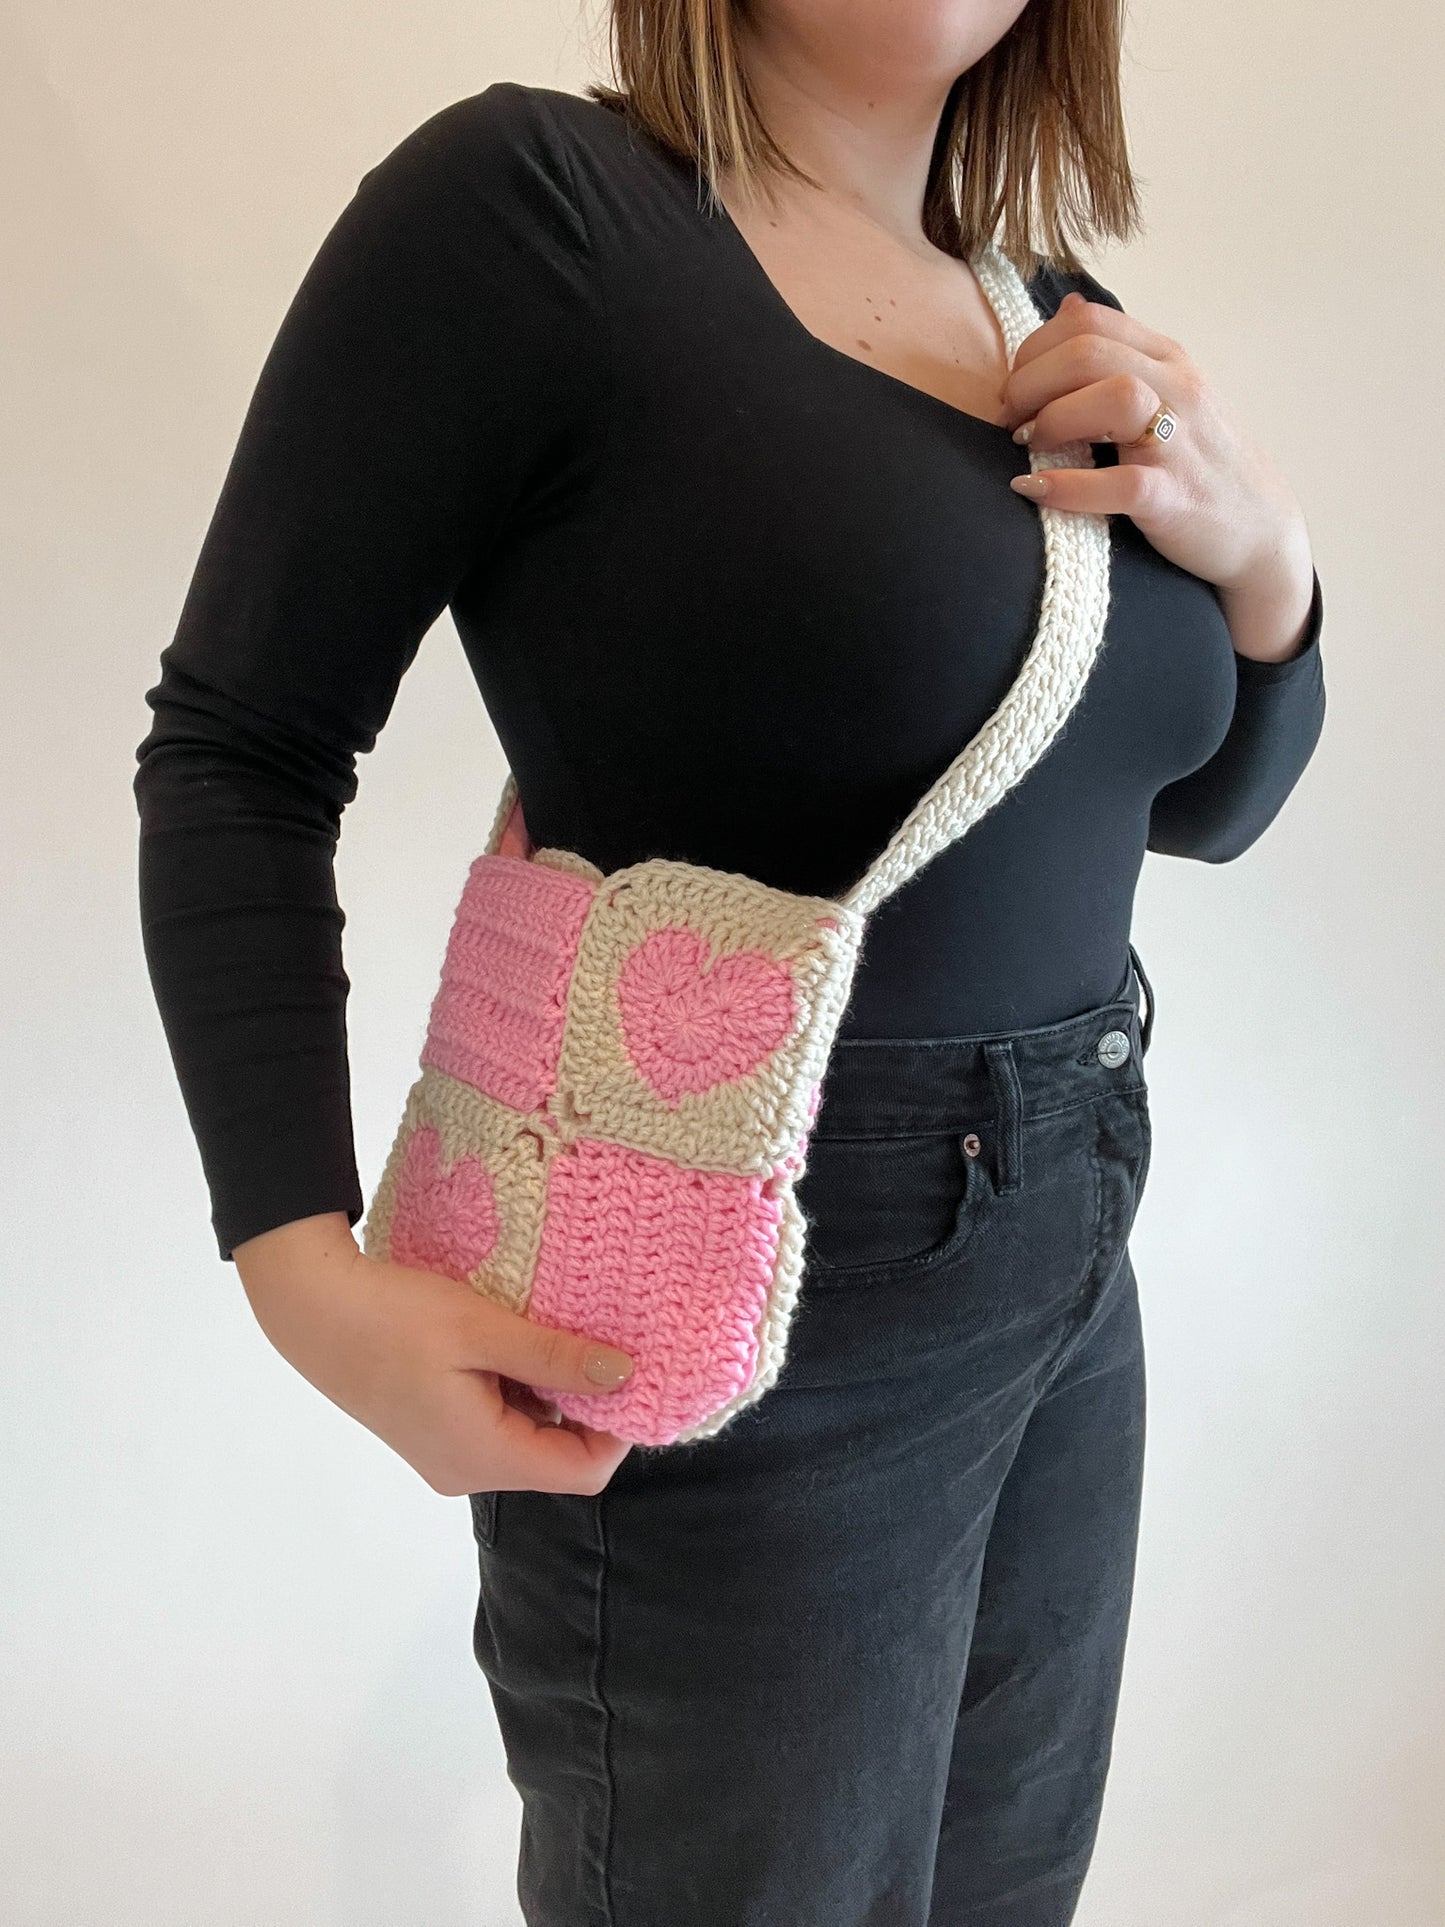 Mini Pink Heart Checkered Crochet Bag